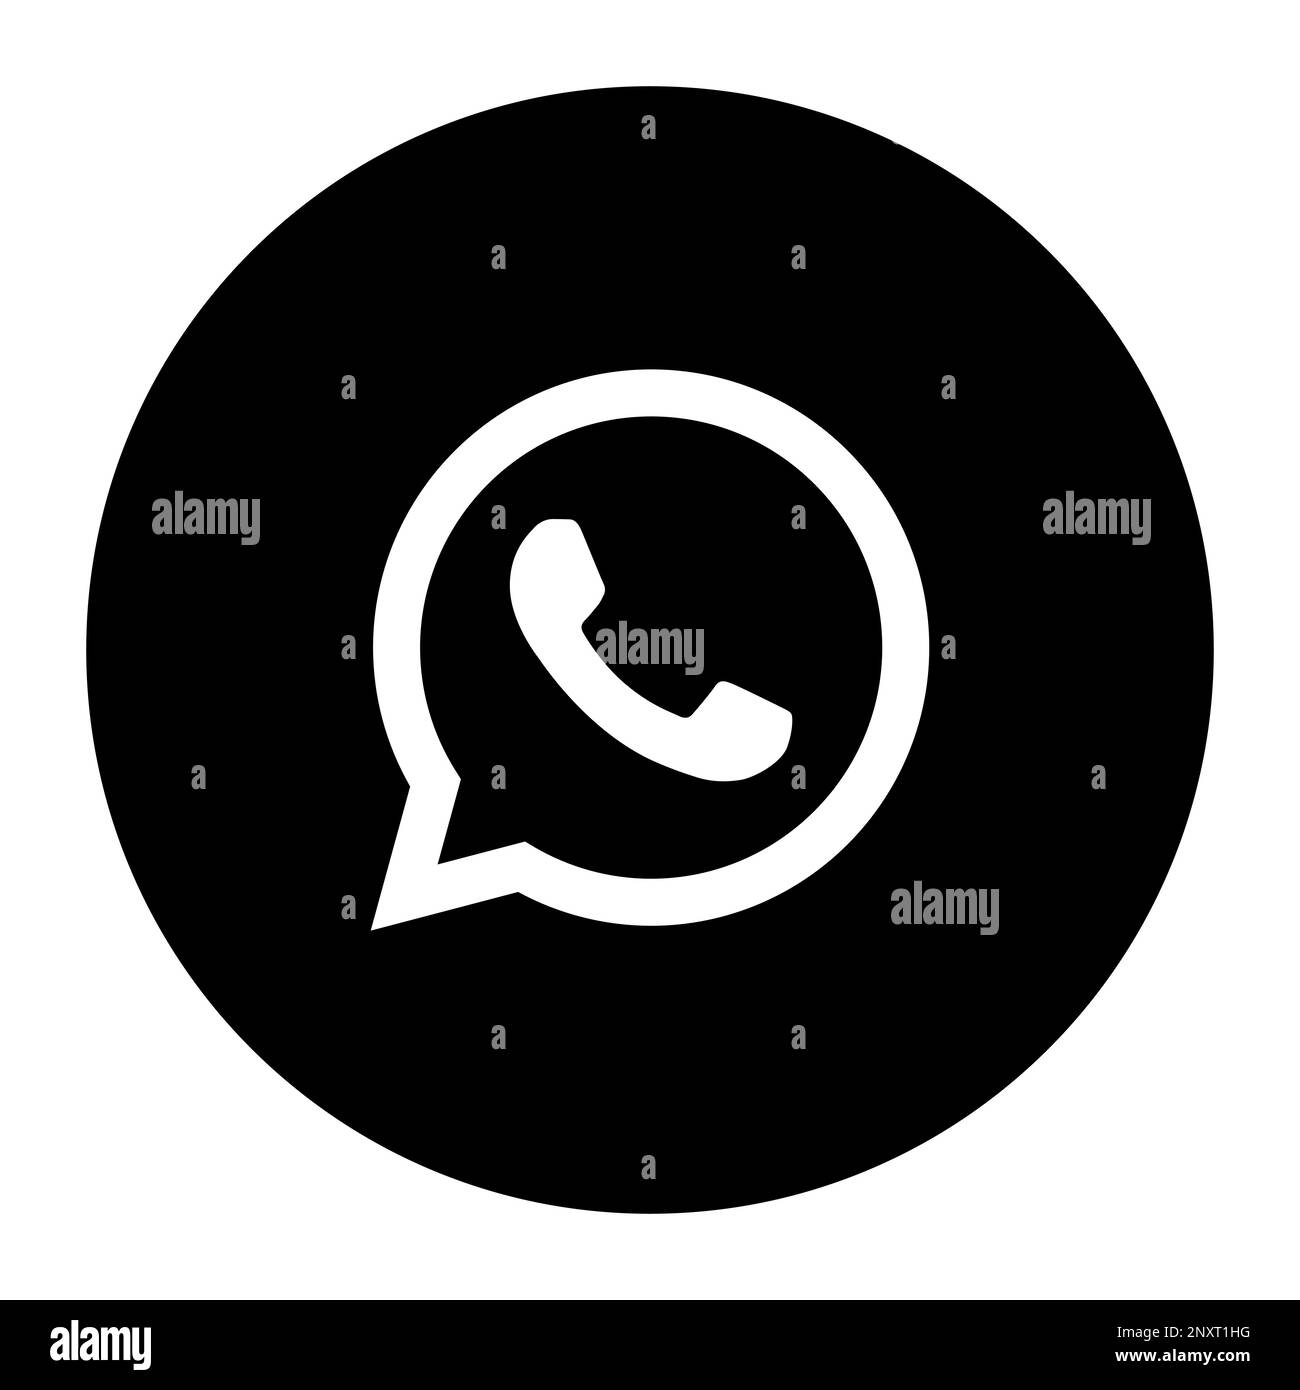 WattsApp instant messaging app icon. Black silhouete circle shape ...